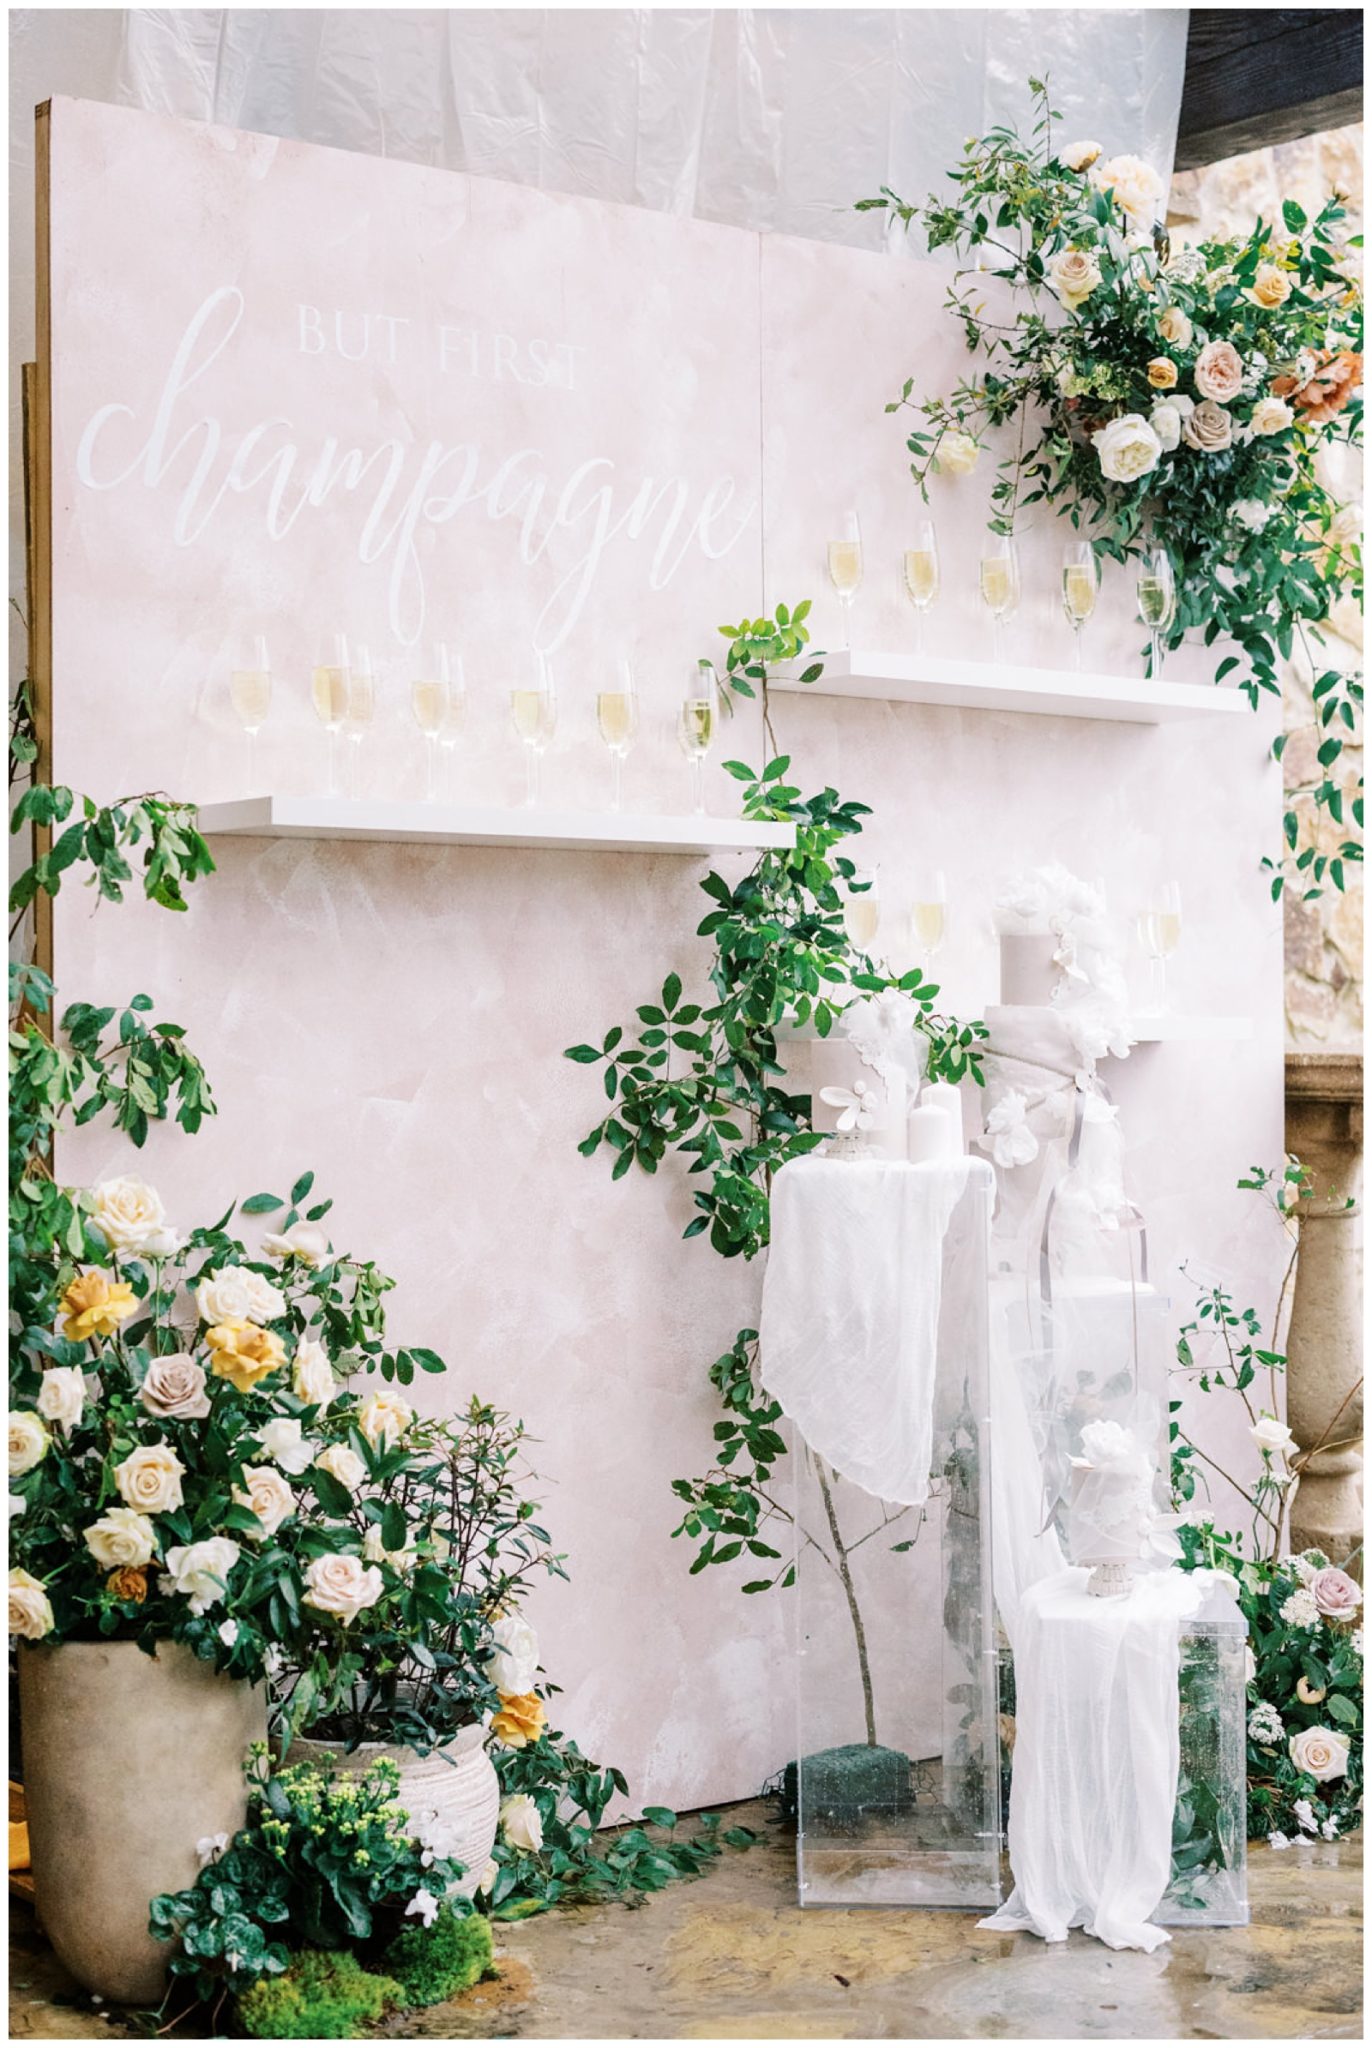 Champagne Wall at Wedding Reception